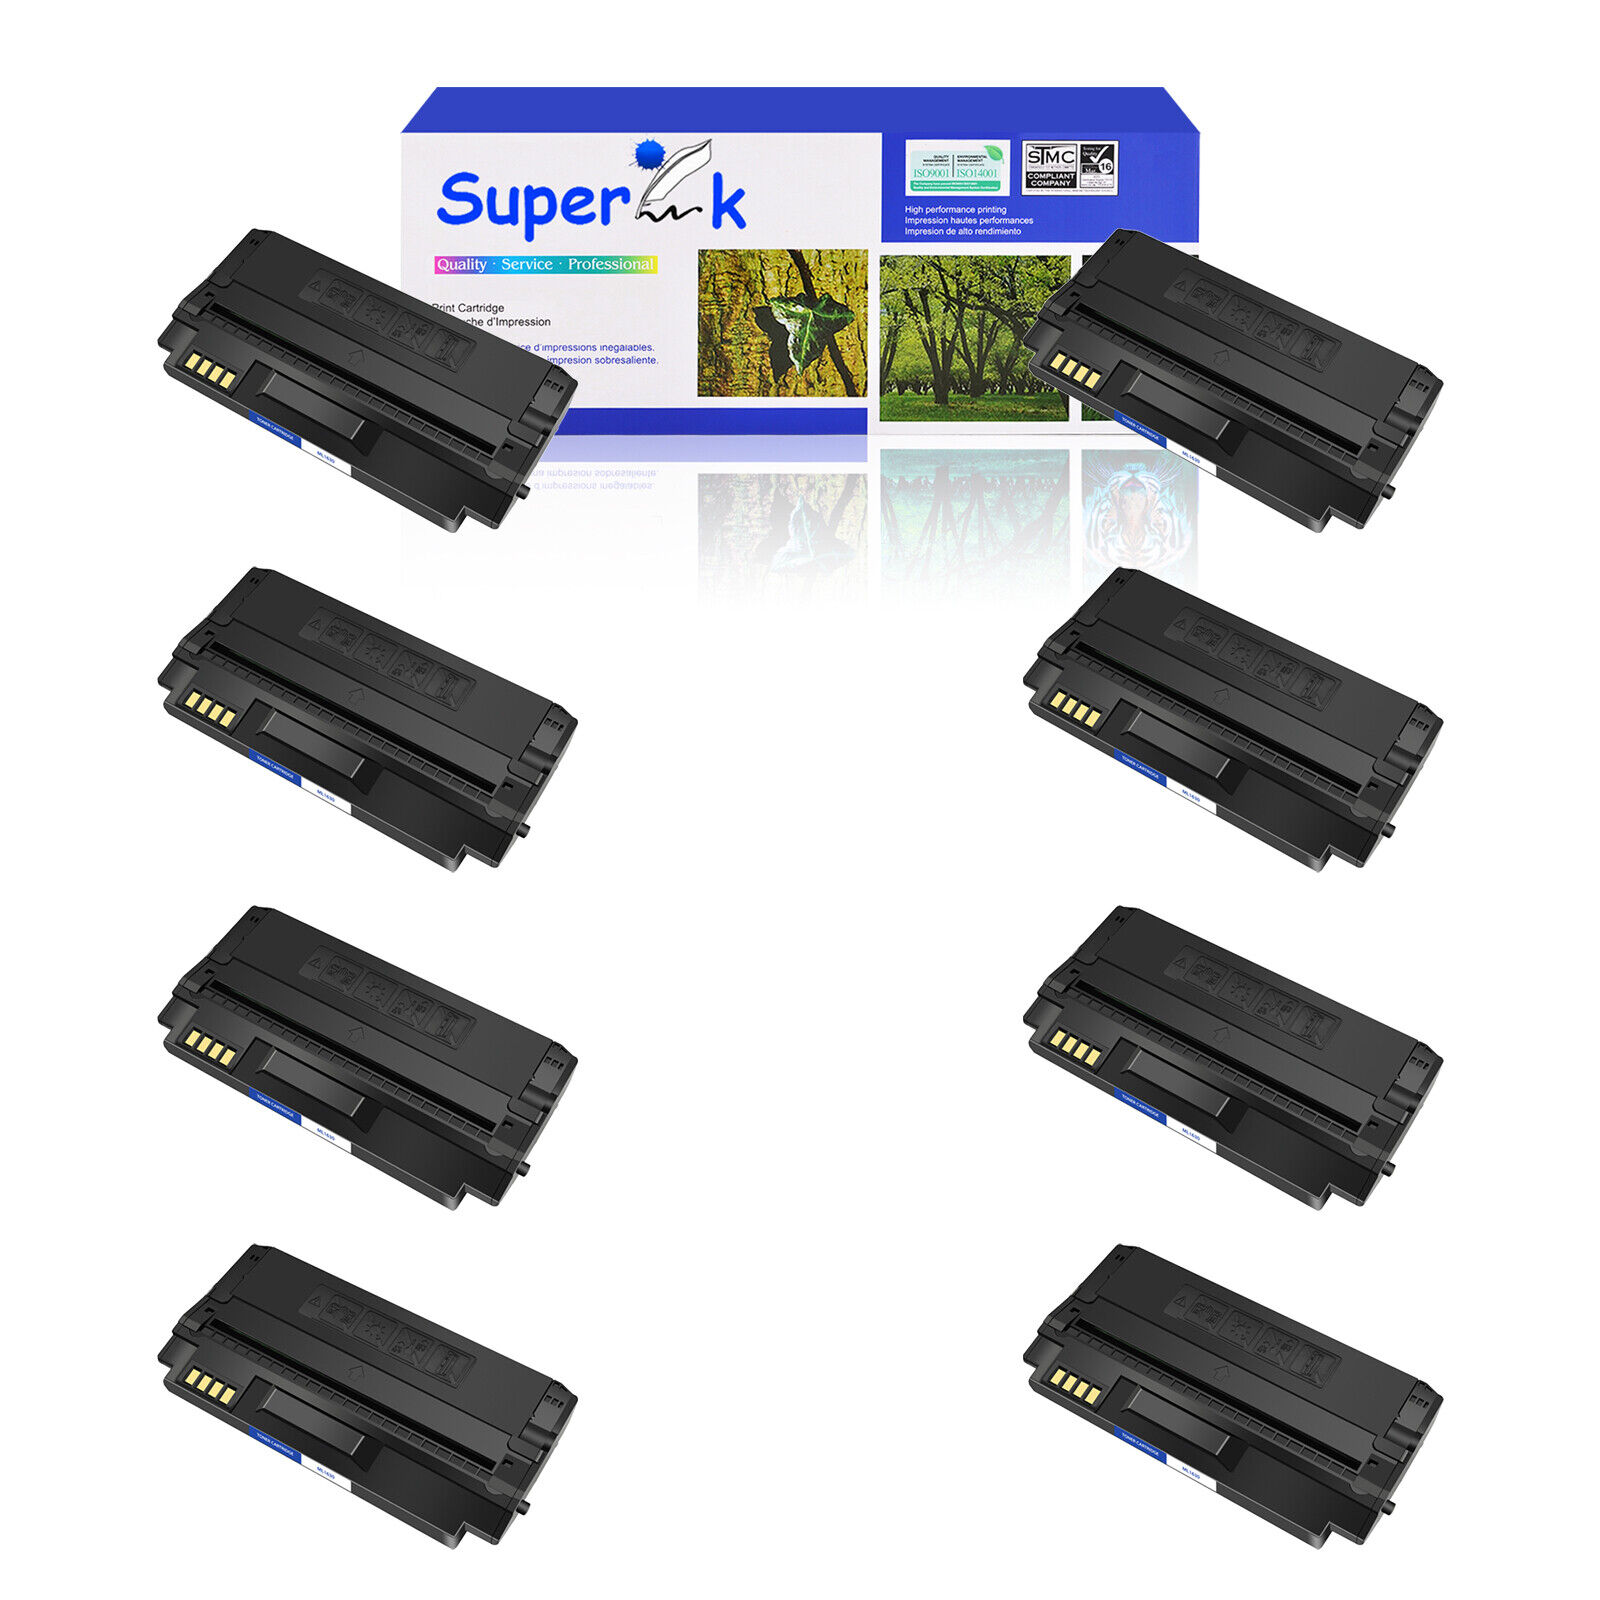 10PK ML1630 Black Toner Cartridge For Samsung SCX-4500W ML-1630 ML-1630W Printer